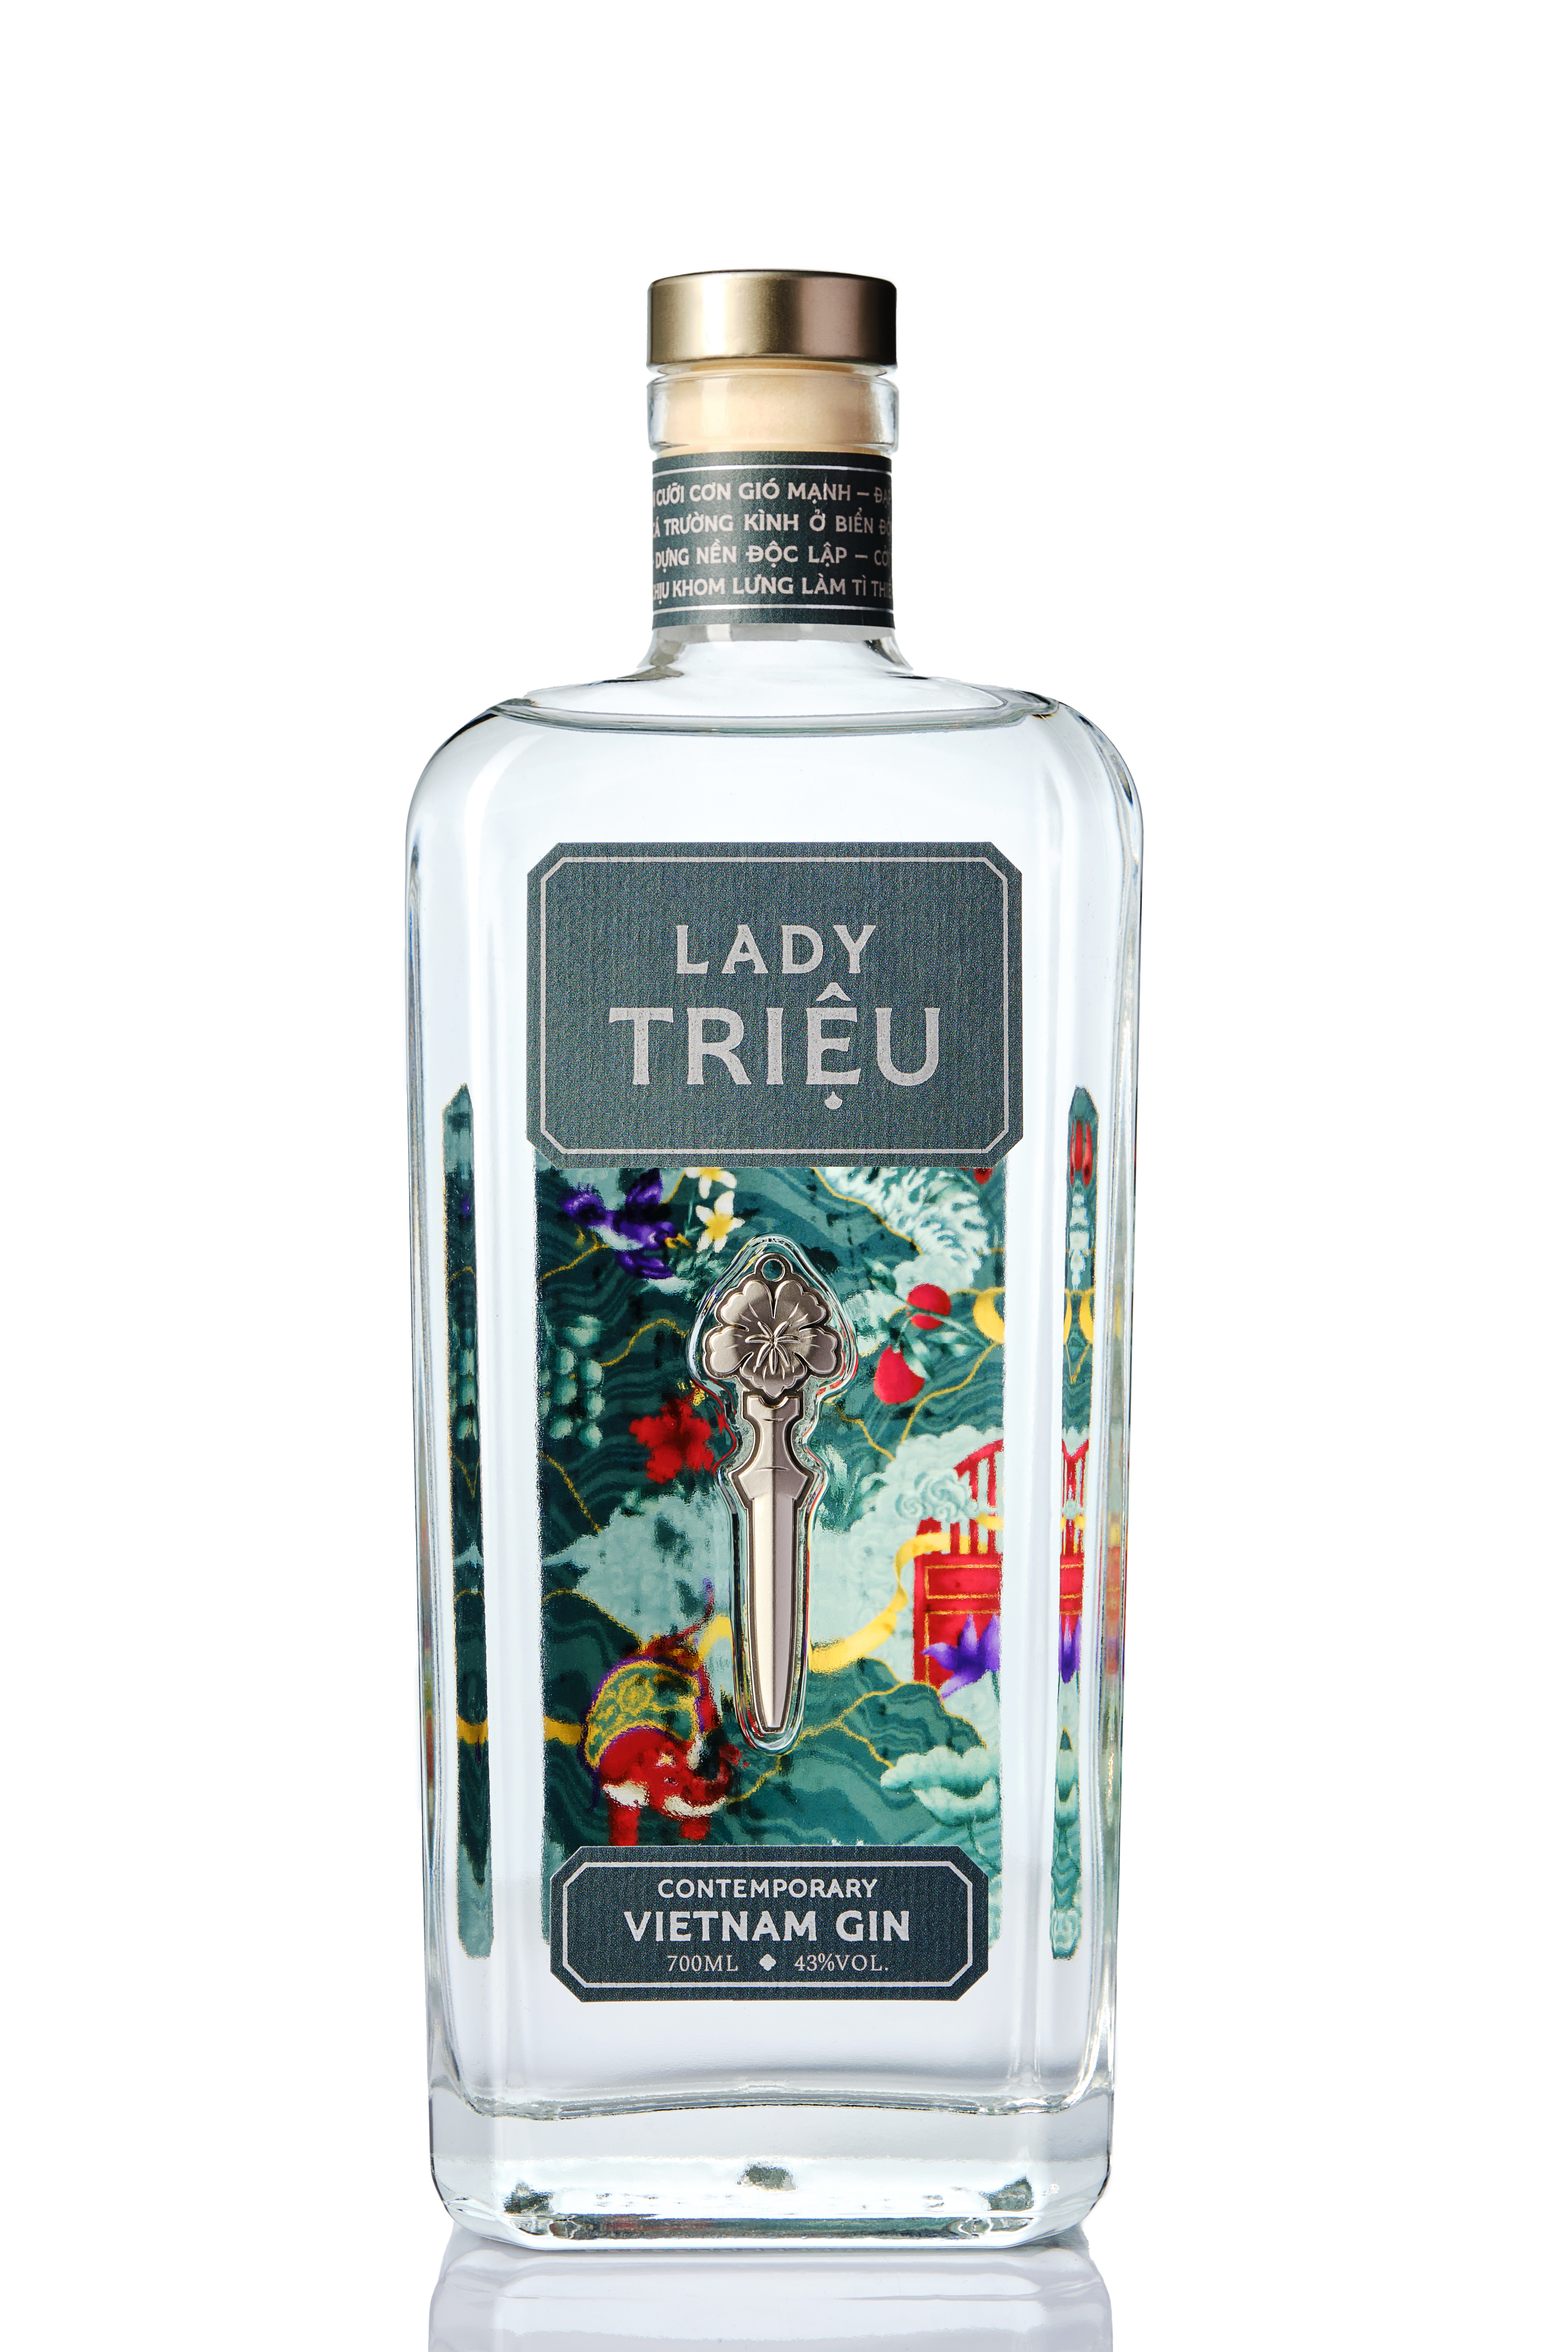 Rượu Lady Triệu Contemporary Việt Nam Gin 43% 1x0.7L